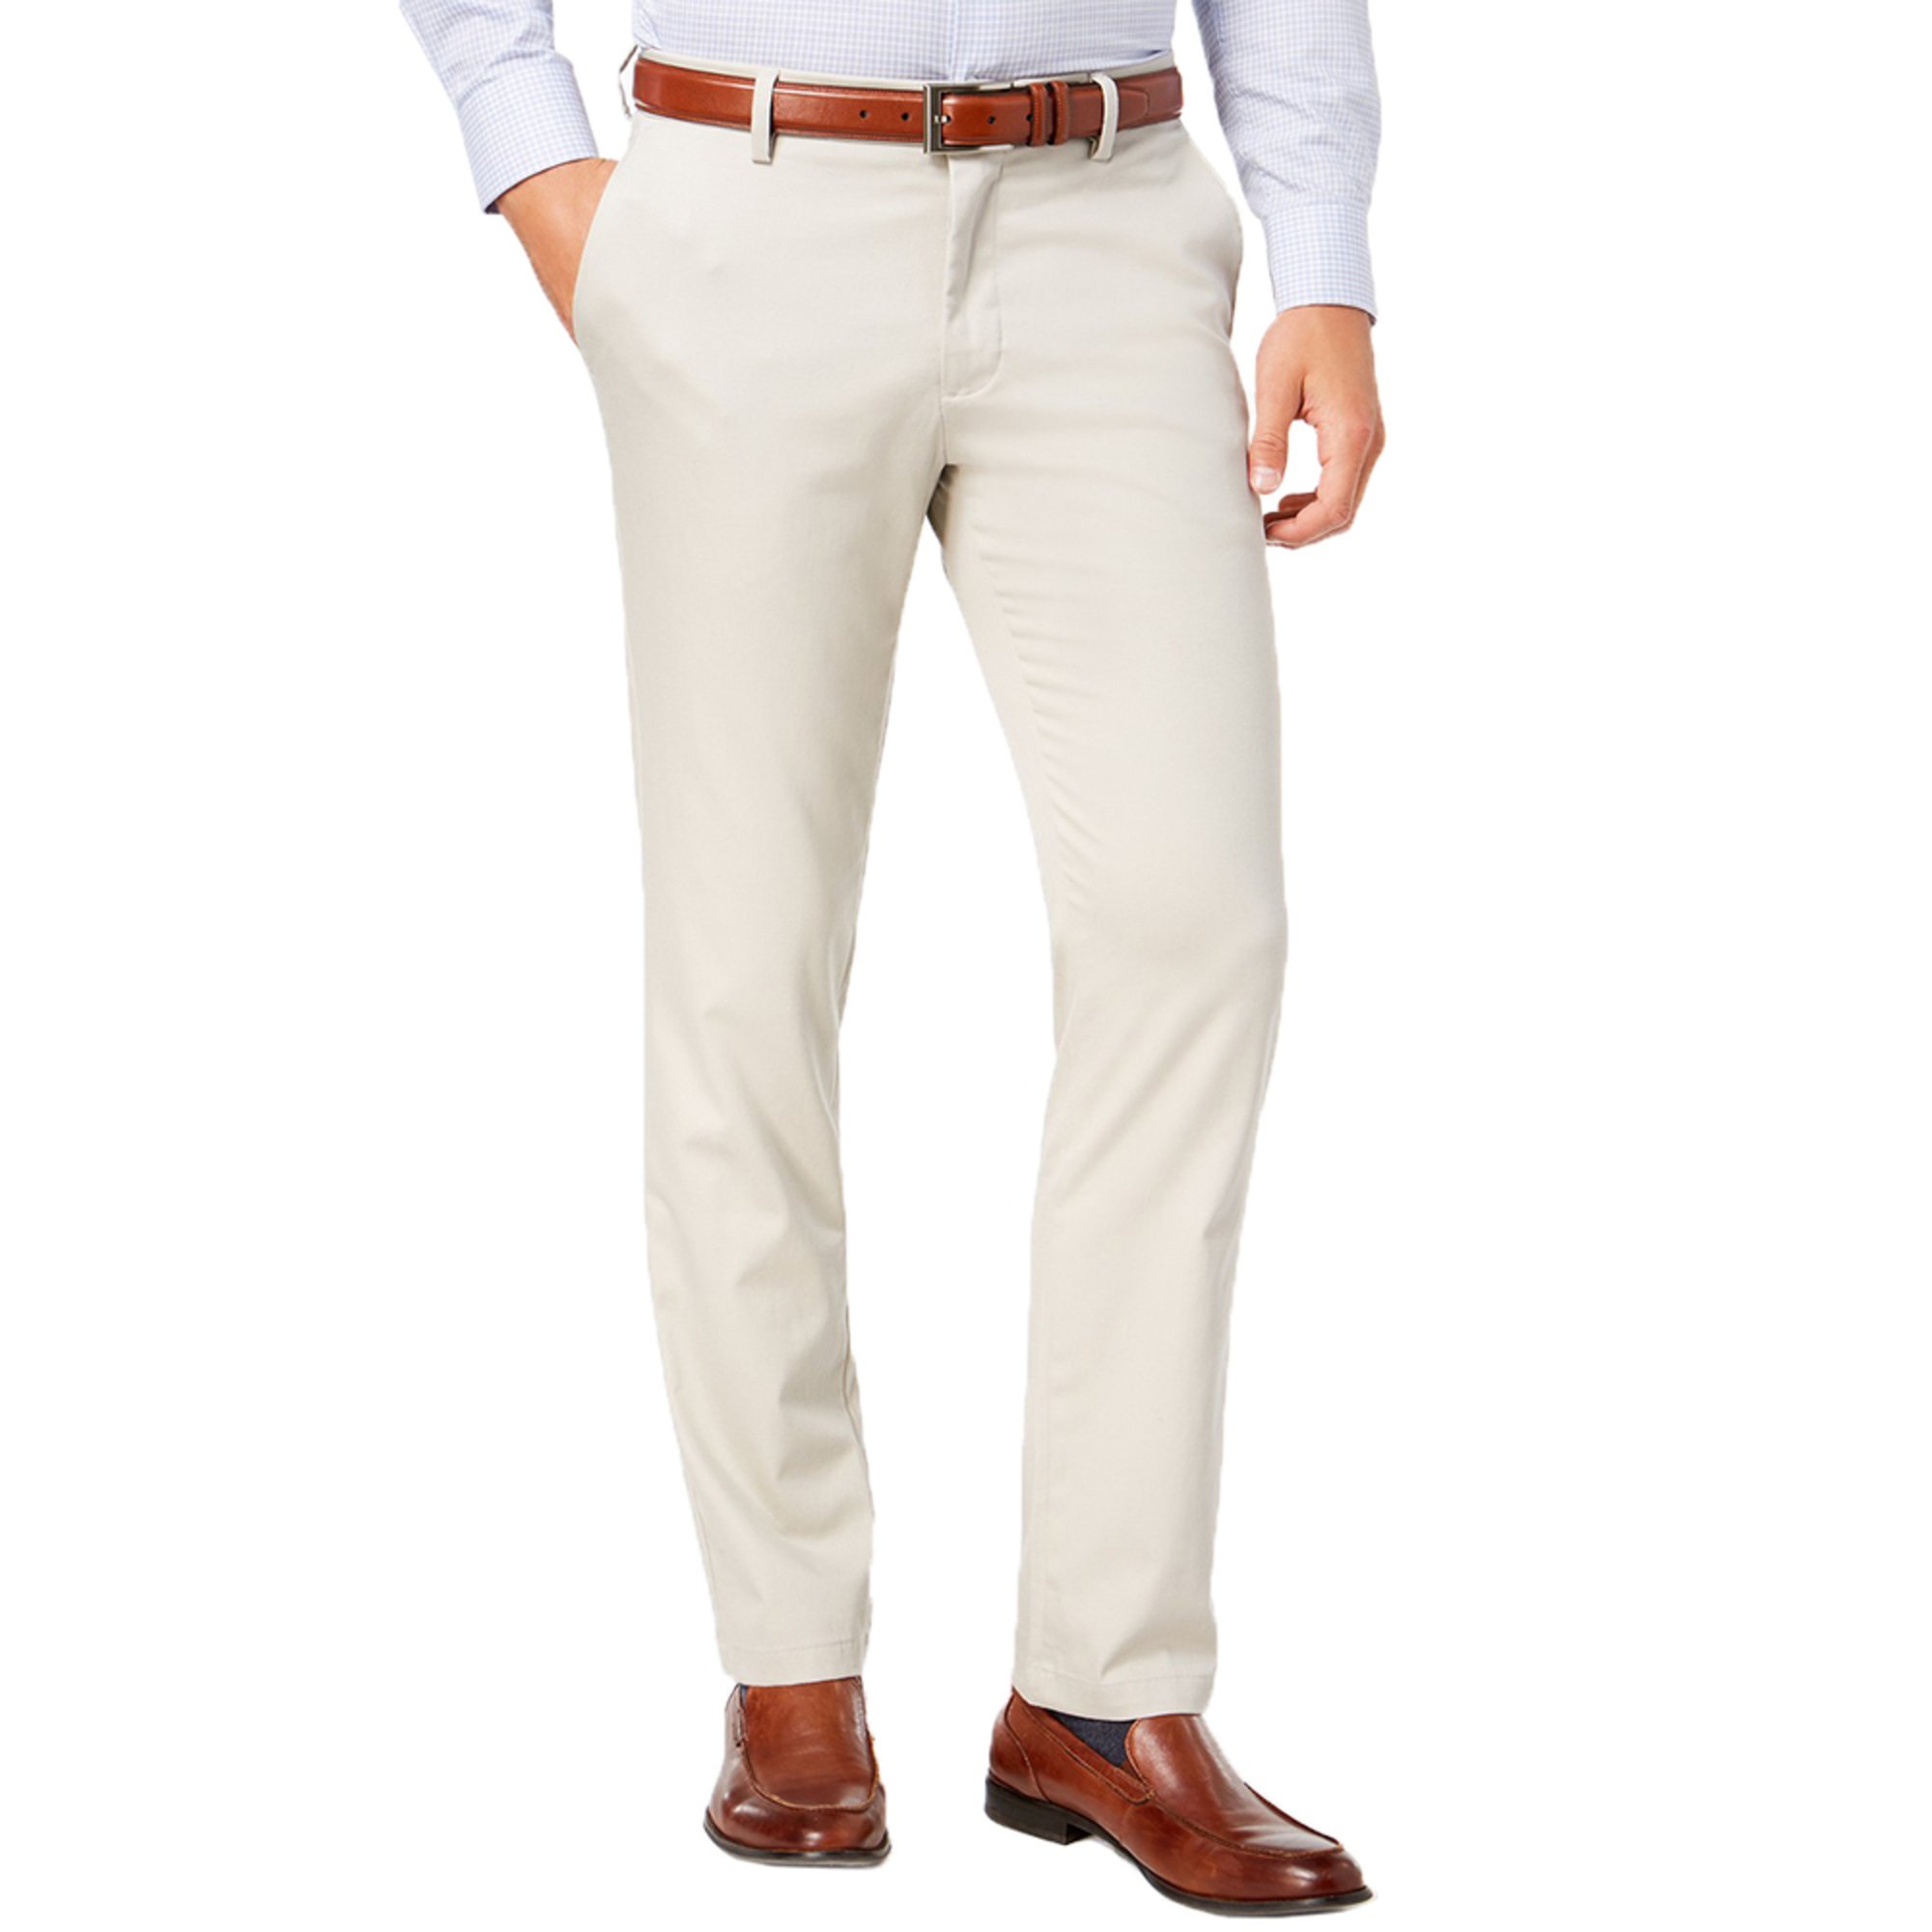 Dockers Men's Signature Slim Fit Flat Front Pants | Casual & Dress ...